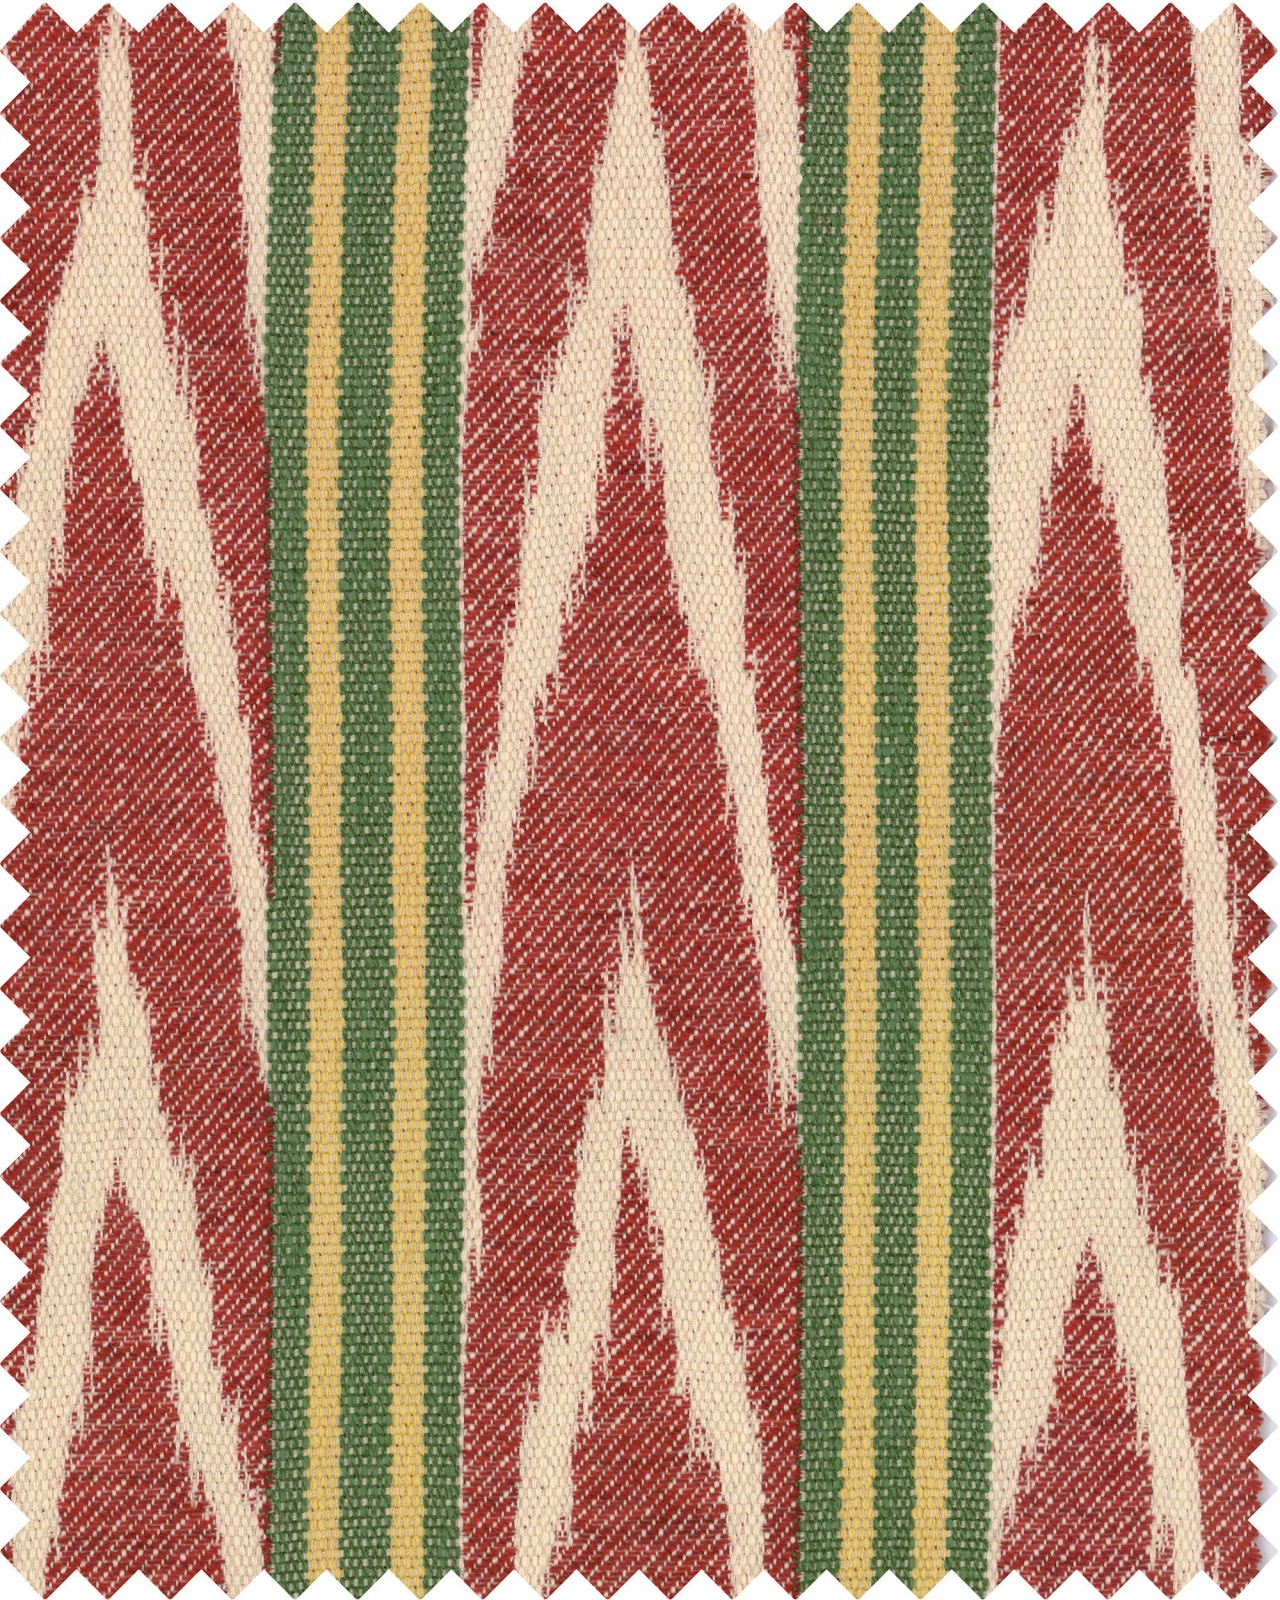 BAKHMAL IKAT Woven Fabric Sample